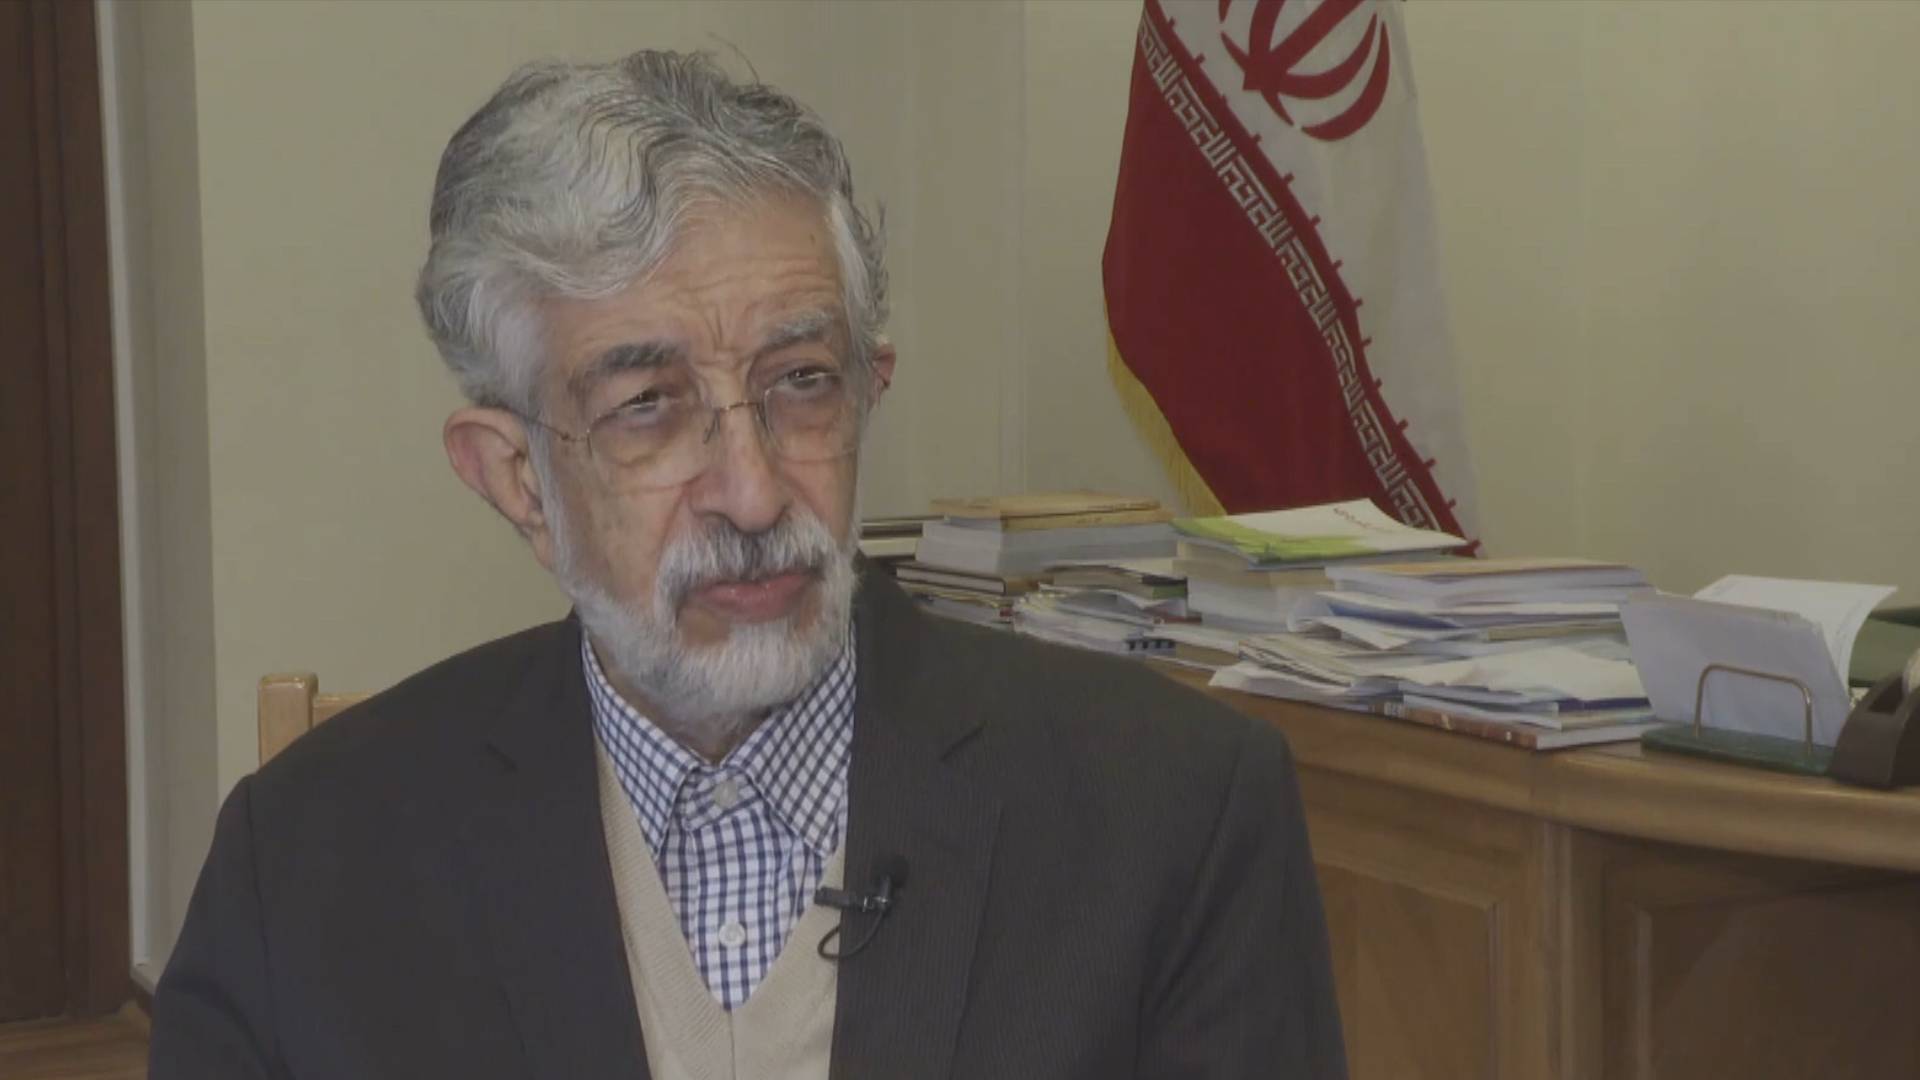 GLOBALink | CPC copycats no model, blazes new trail: former Iranian Parliament speaker